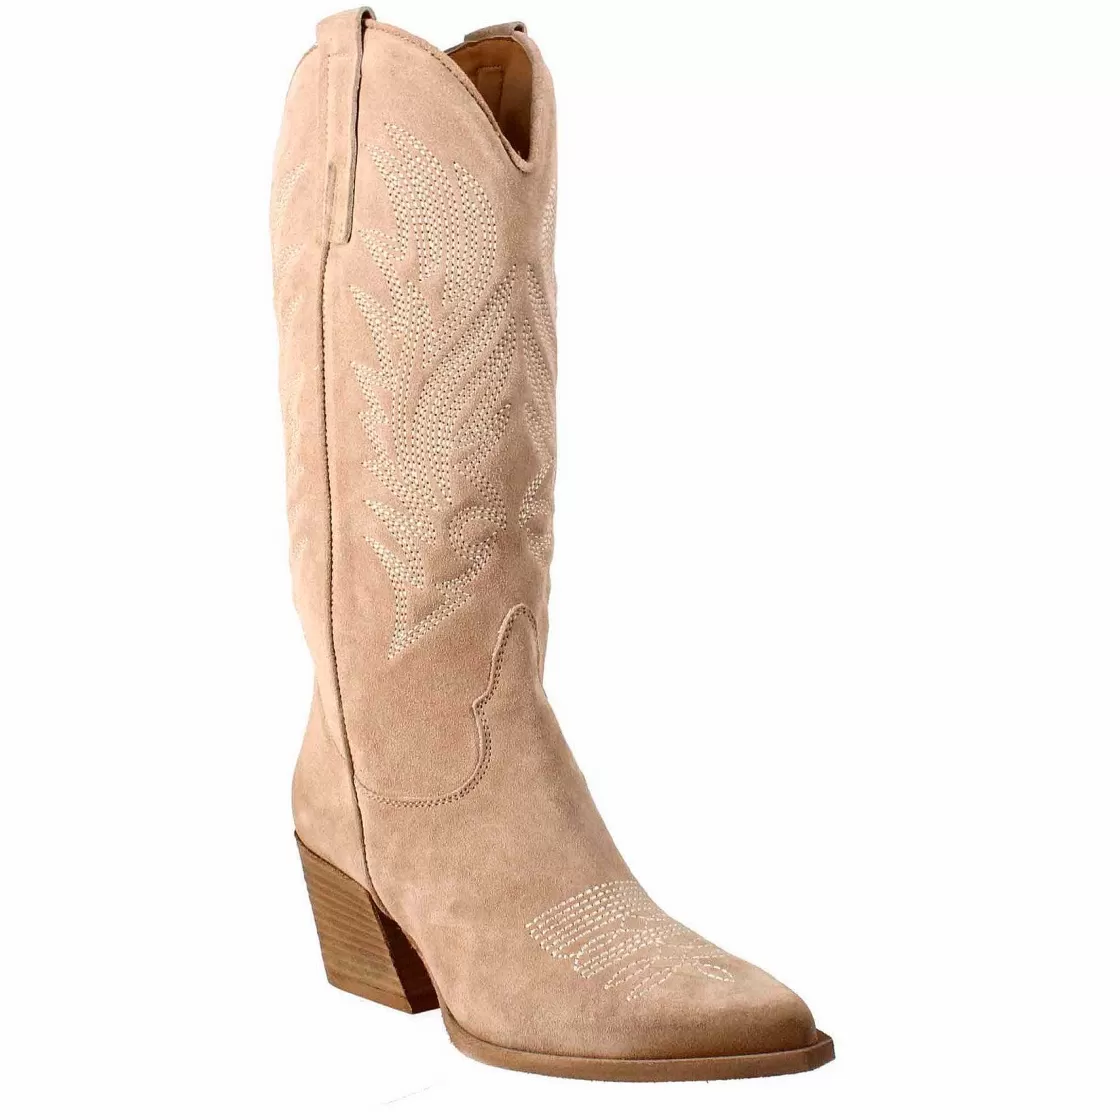 Leonardo Women'S Medium Texan Boots In Light Beige Suede With Embroidery. Best Sale